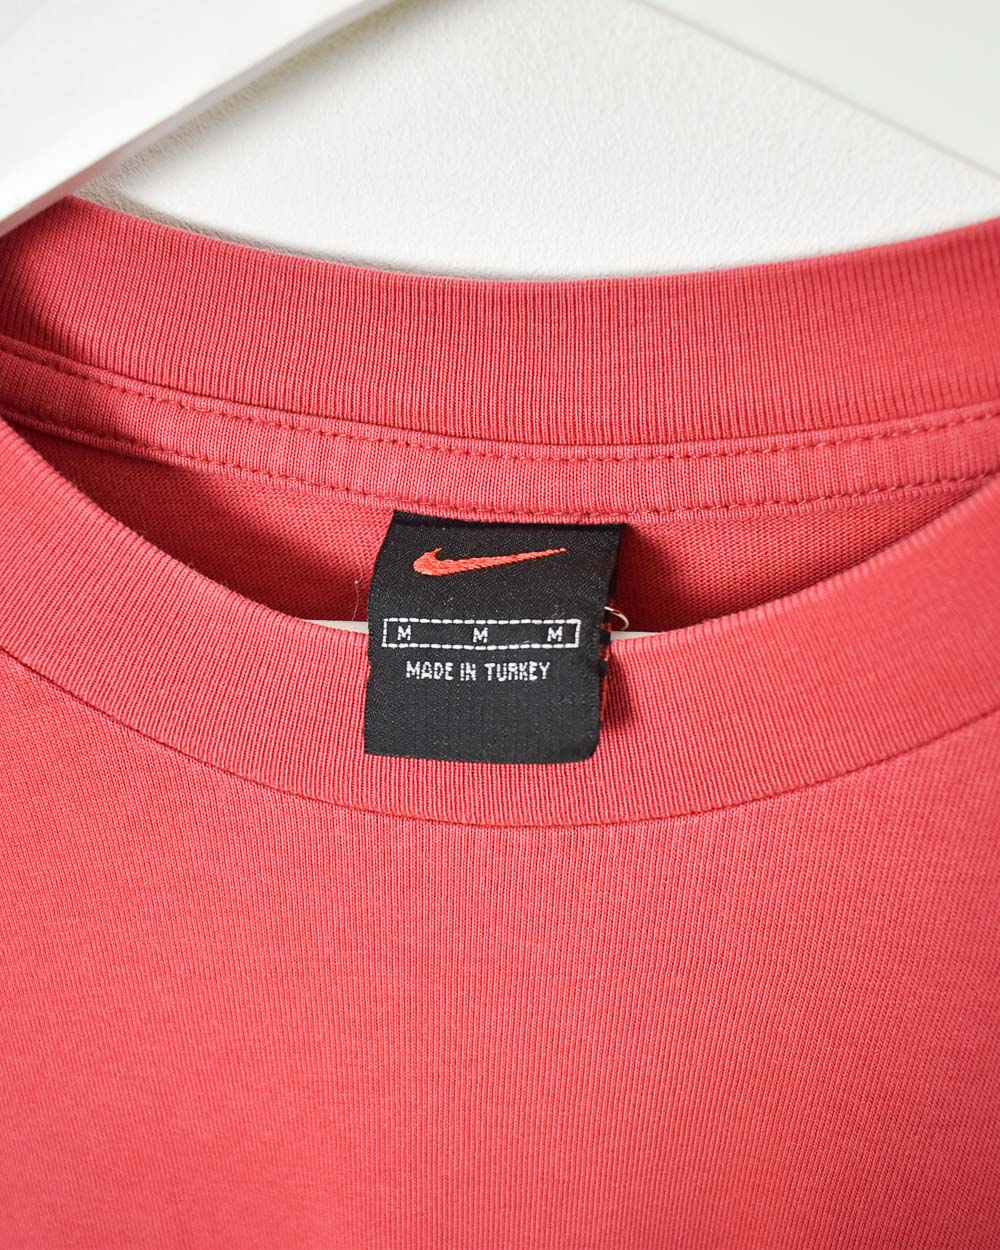 Red Nike T-Shirt - Medium